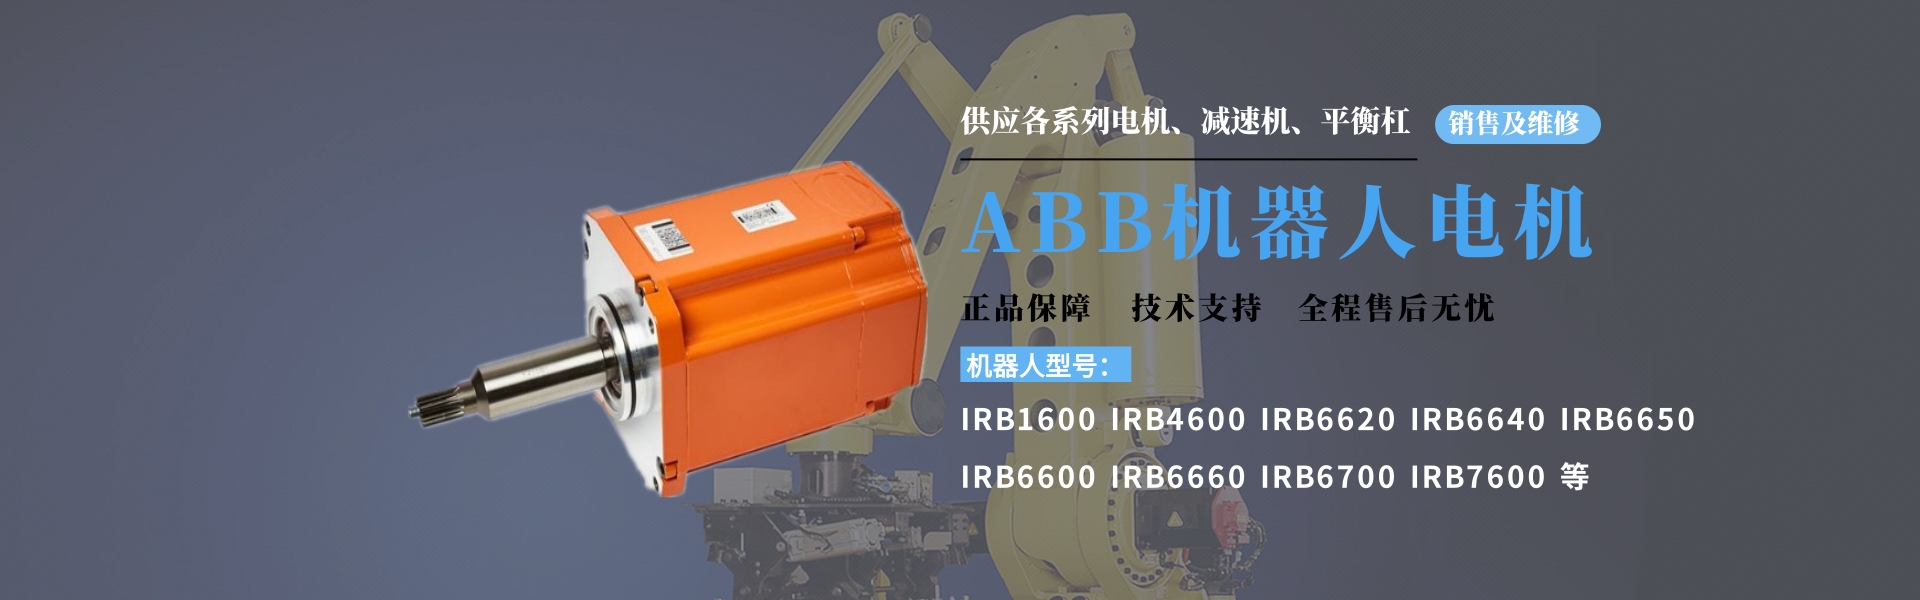 ABB机器人电机3HAC050164-001 现货 维修 ABB机器人电机3HAC050164-001,ABB机器人马达3HAC050164-001,ABB机器人伺服电机,ABB机器人伺服马达,ABB机器人电机维修